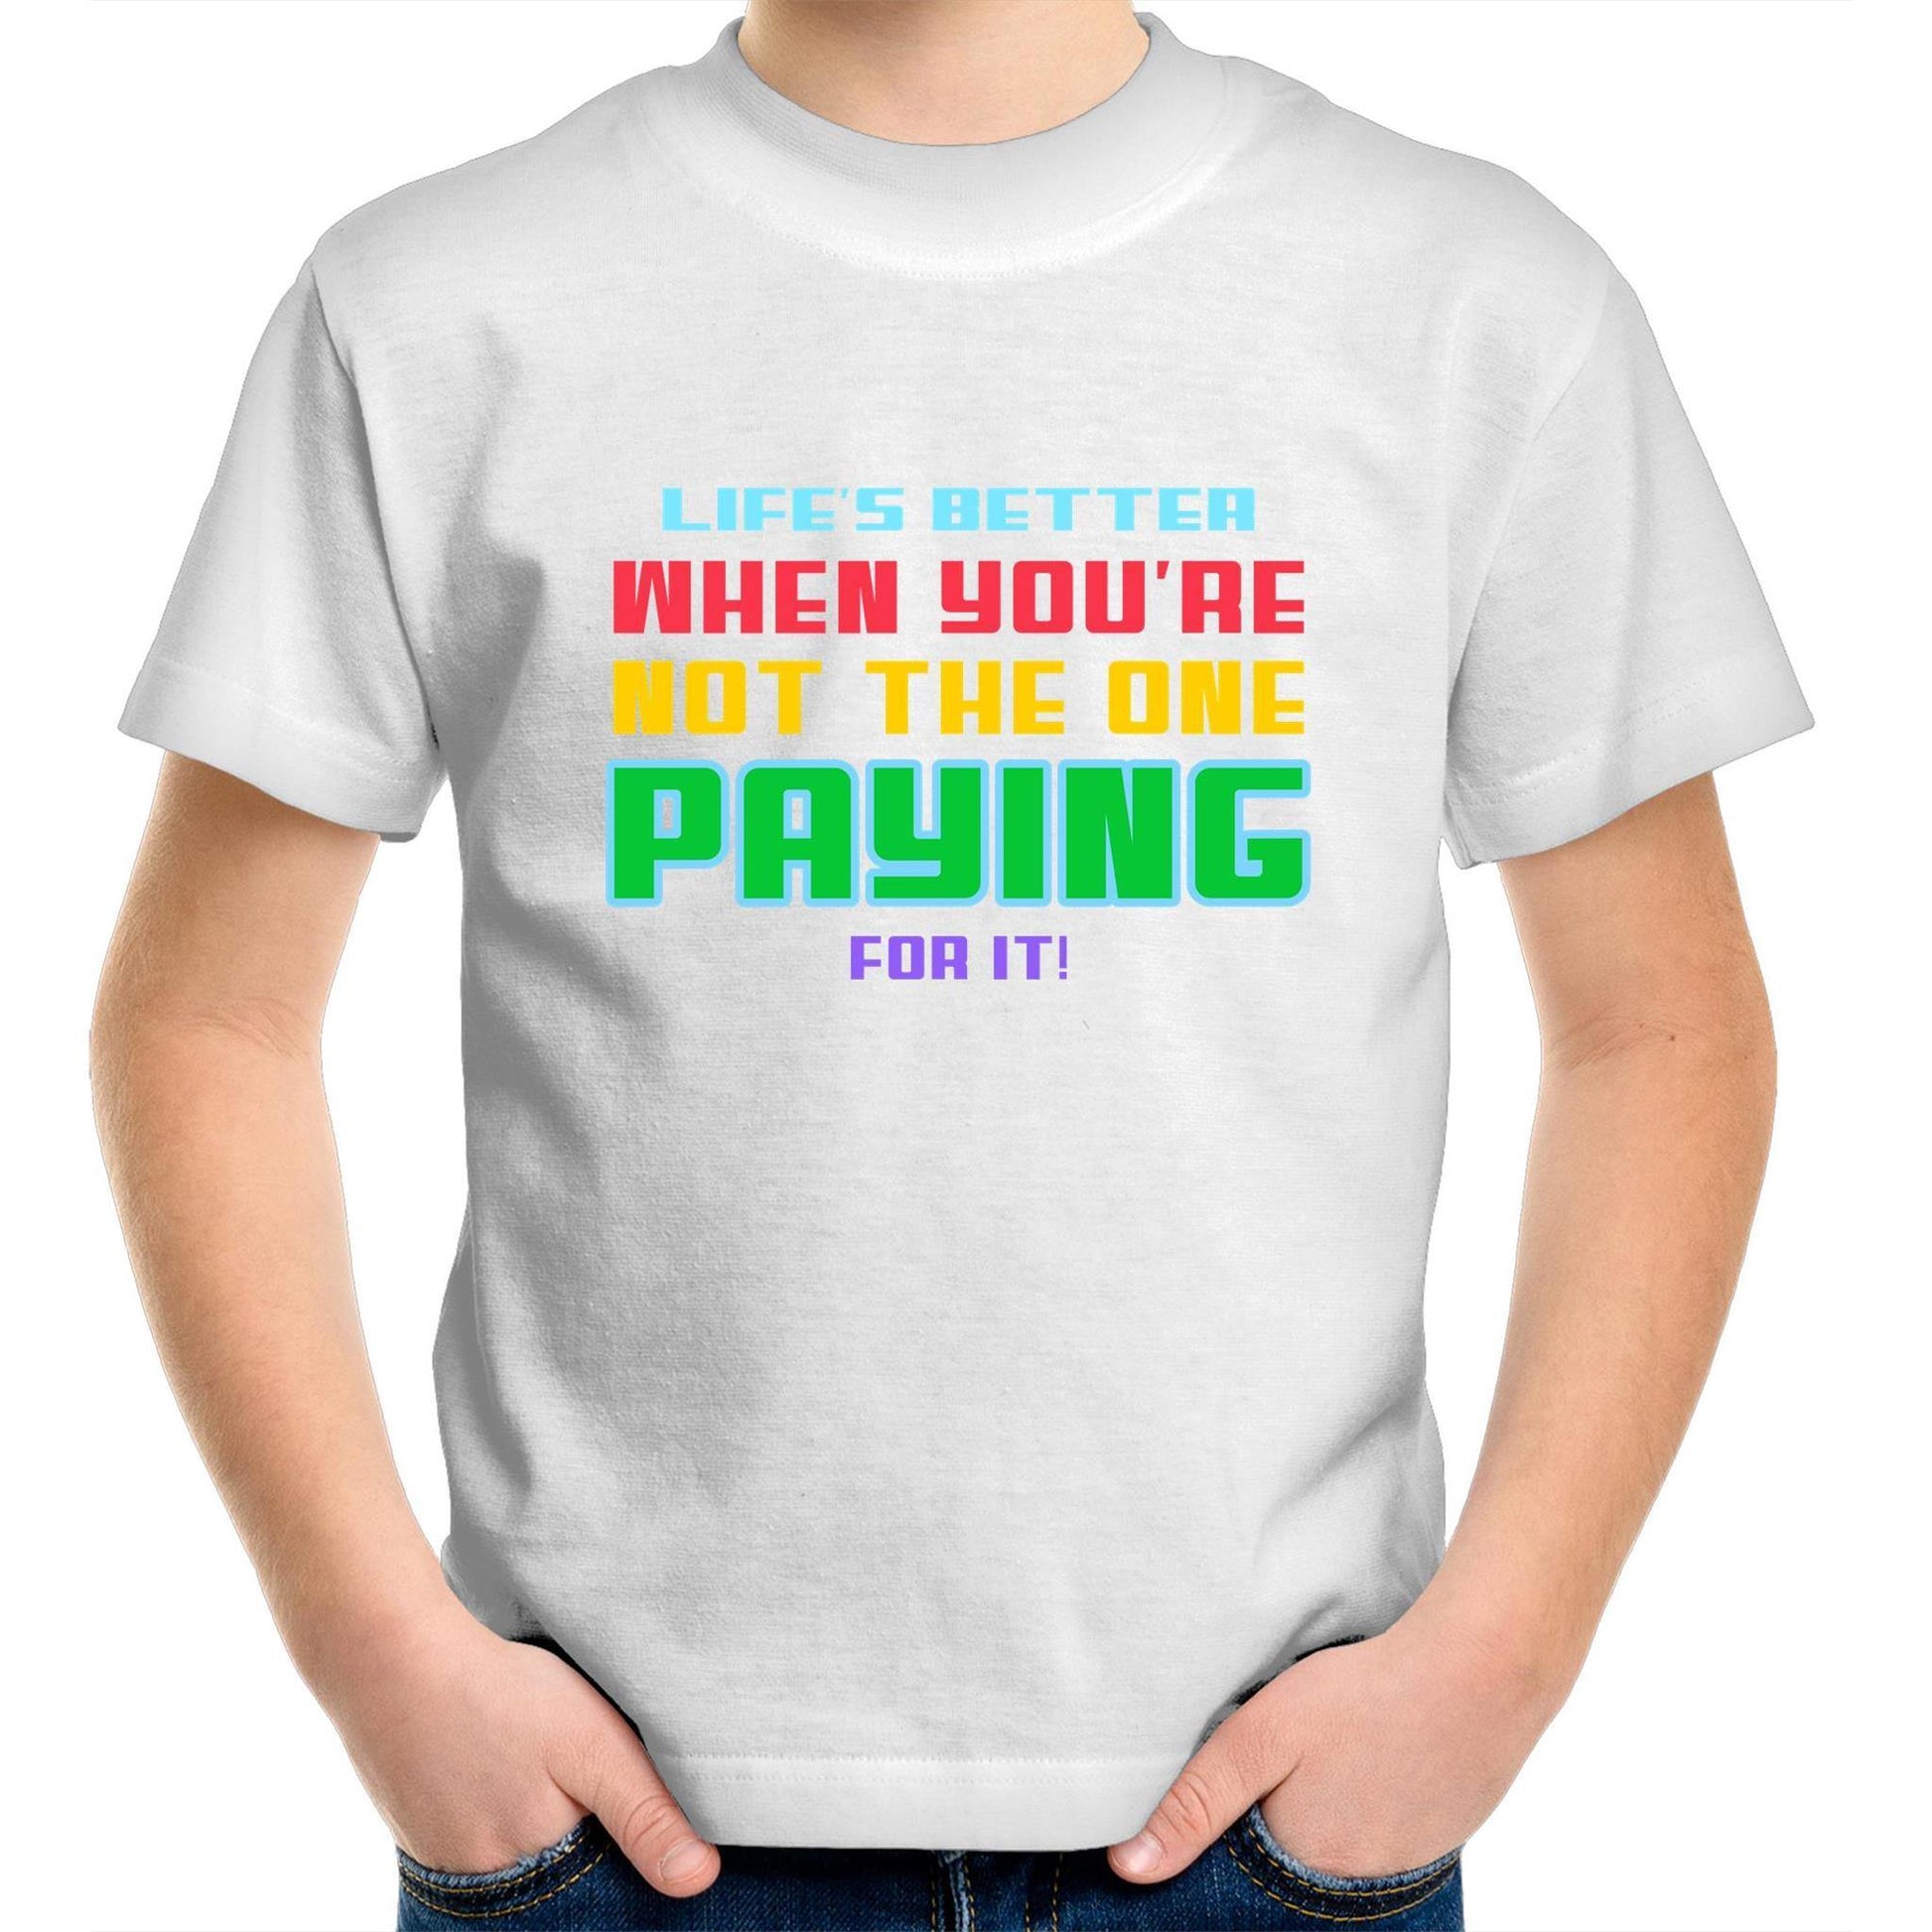 Life's Better - Kids Youth Crew T-Shirt White Kids Youth T-shirt